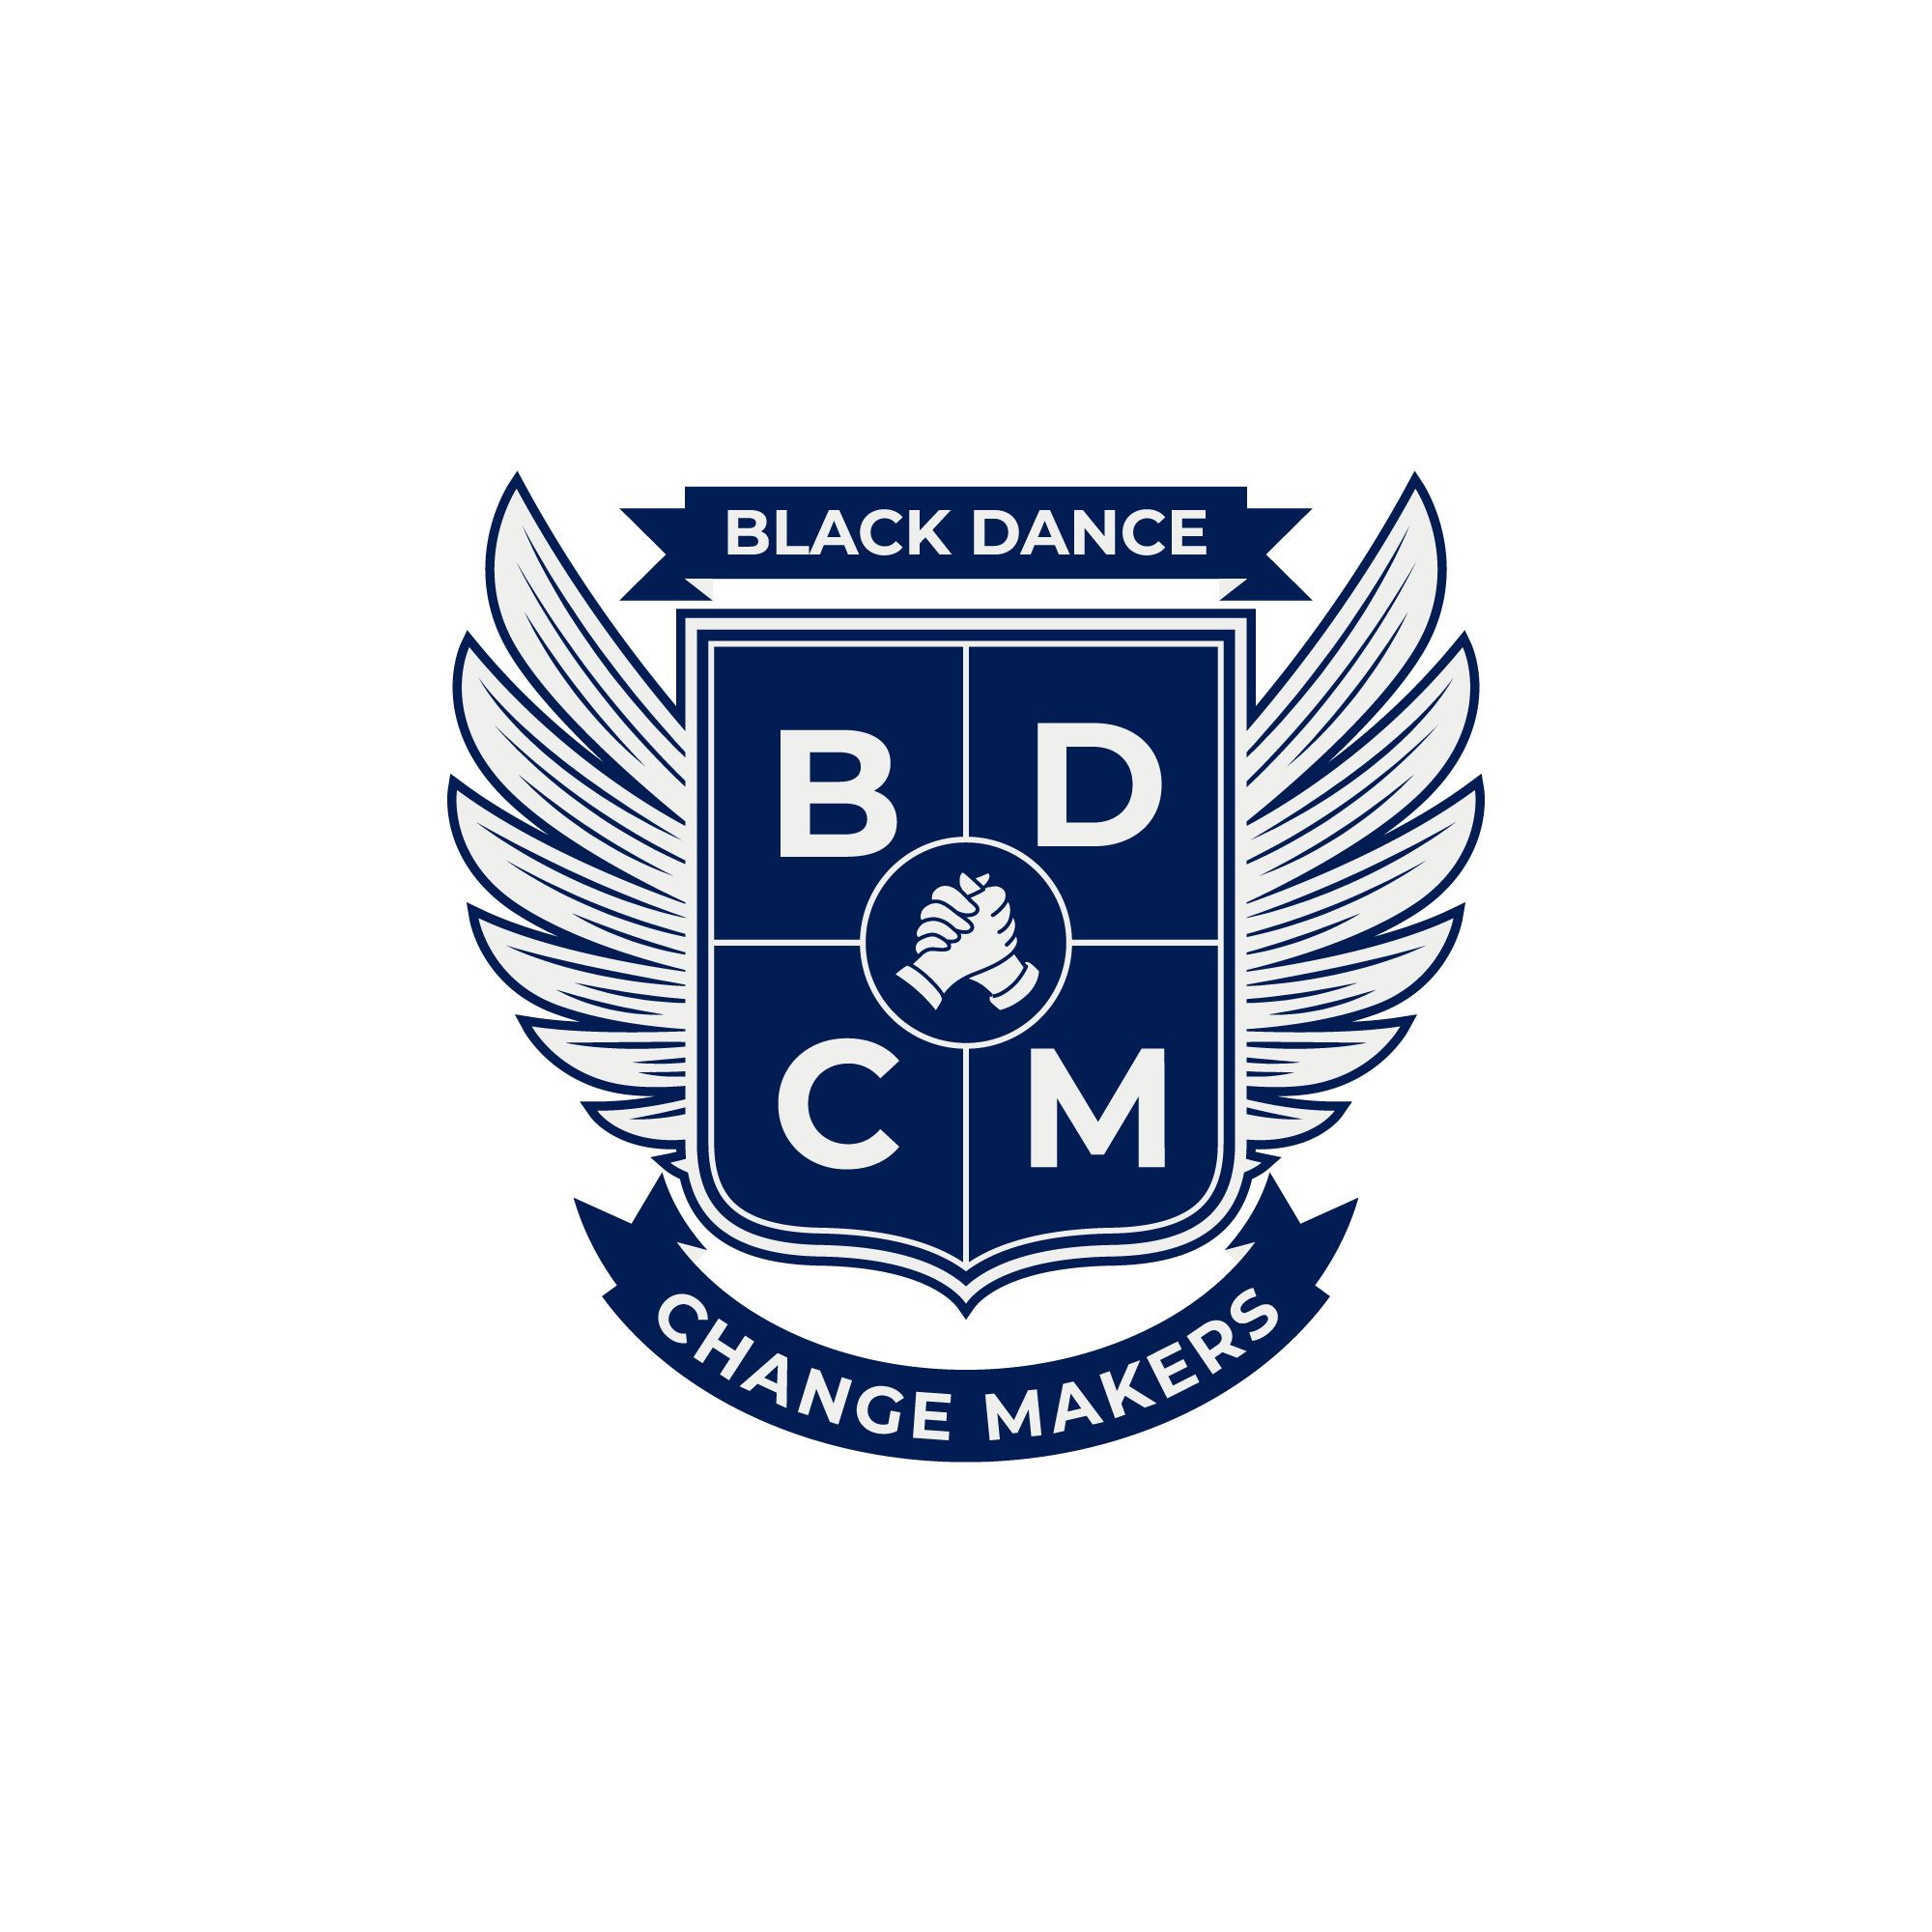 Black Dance Change Makers